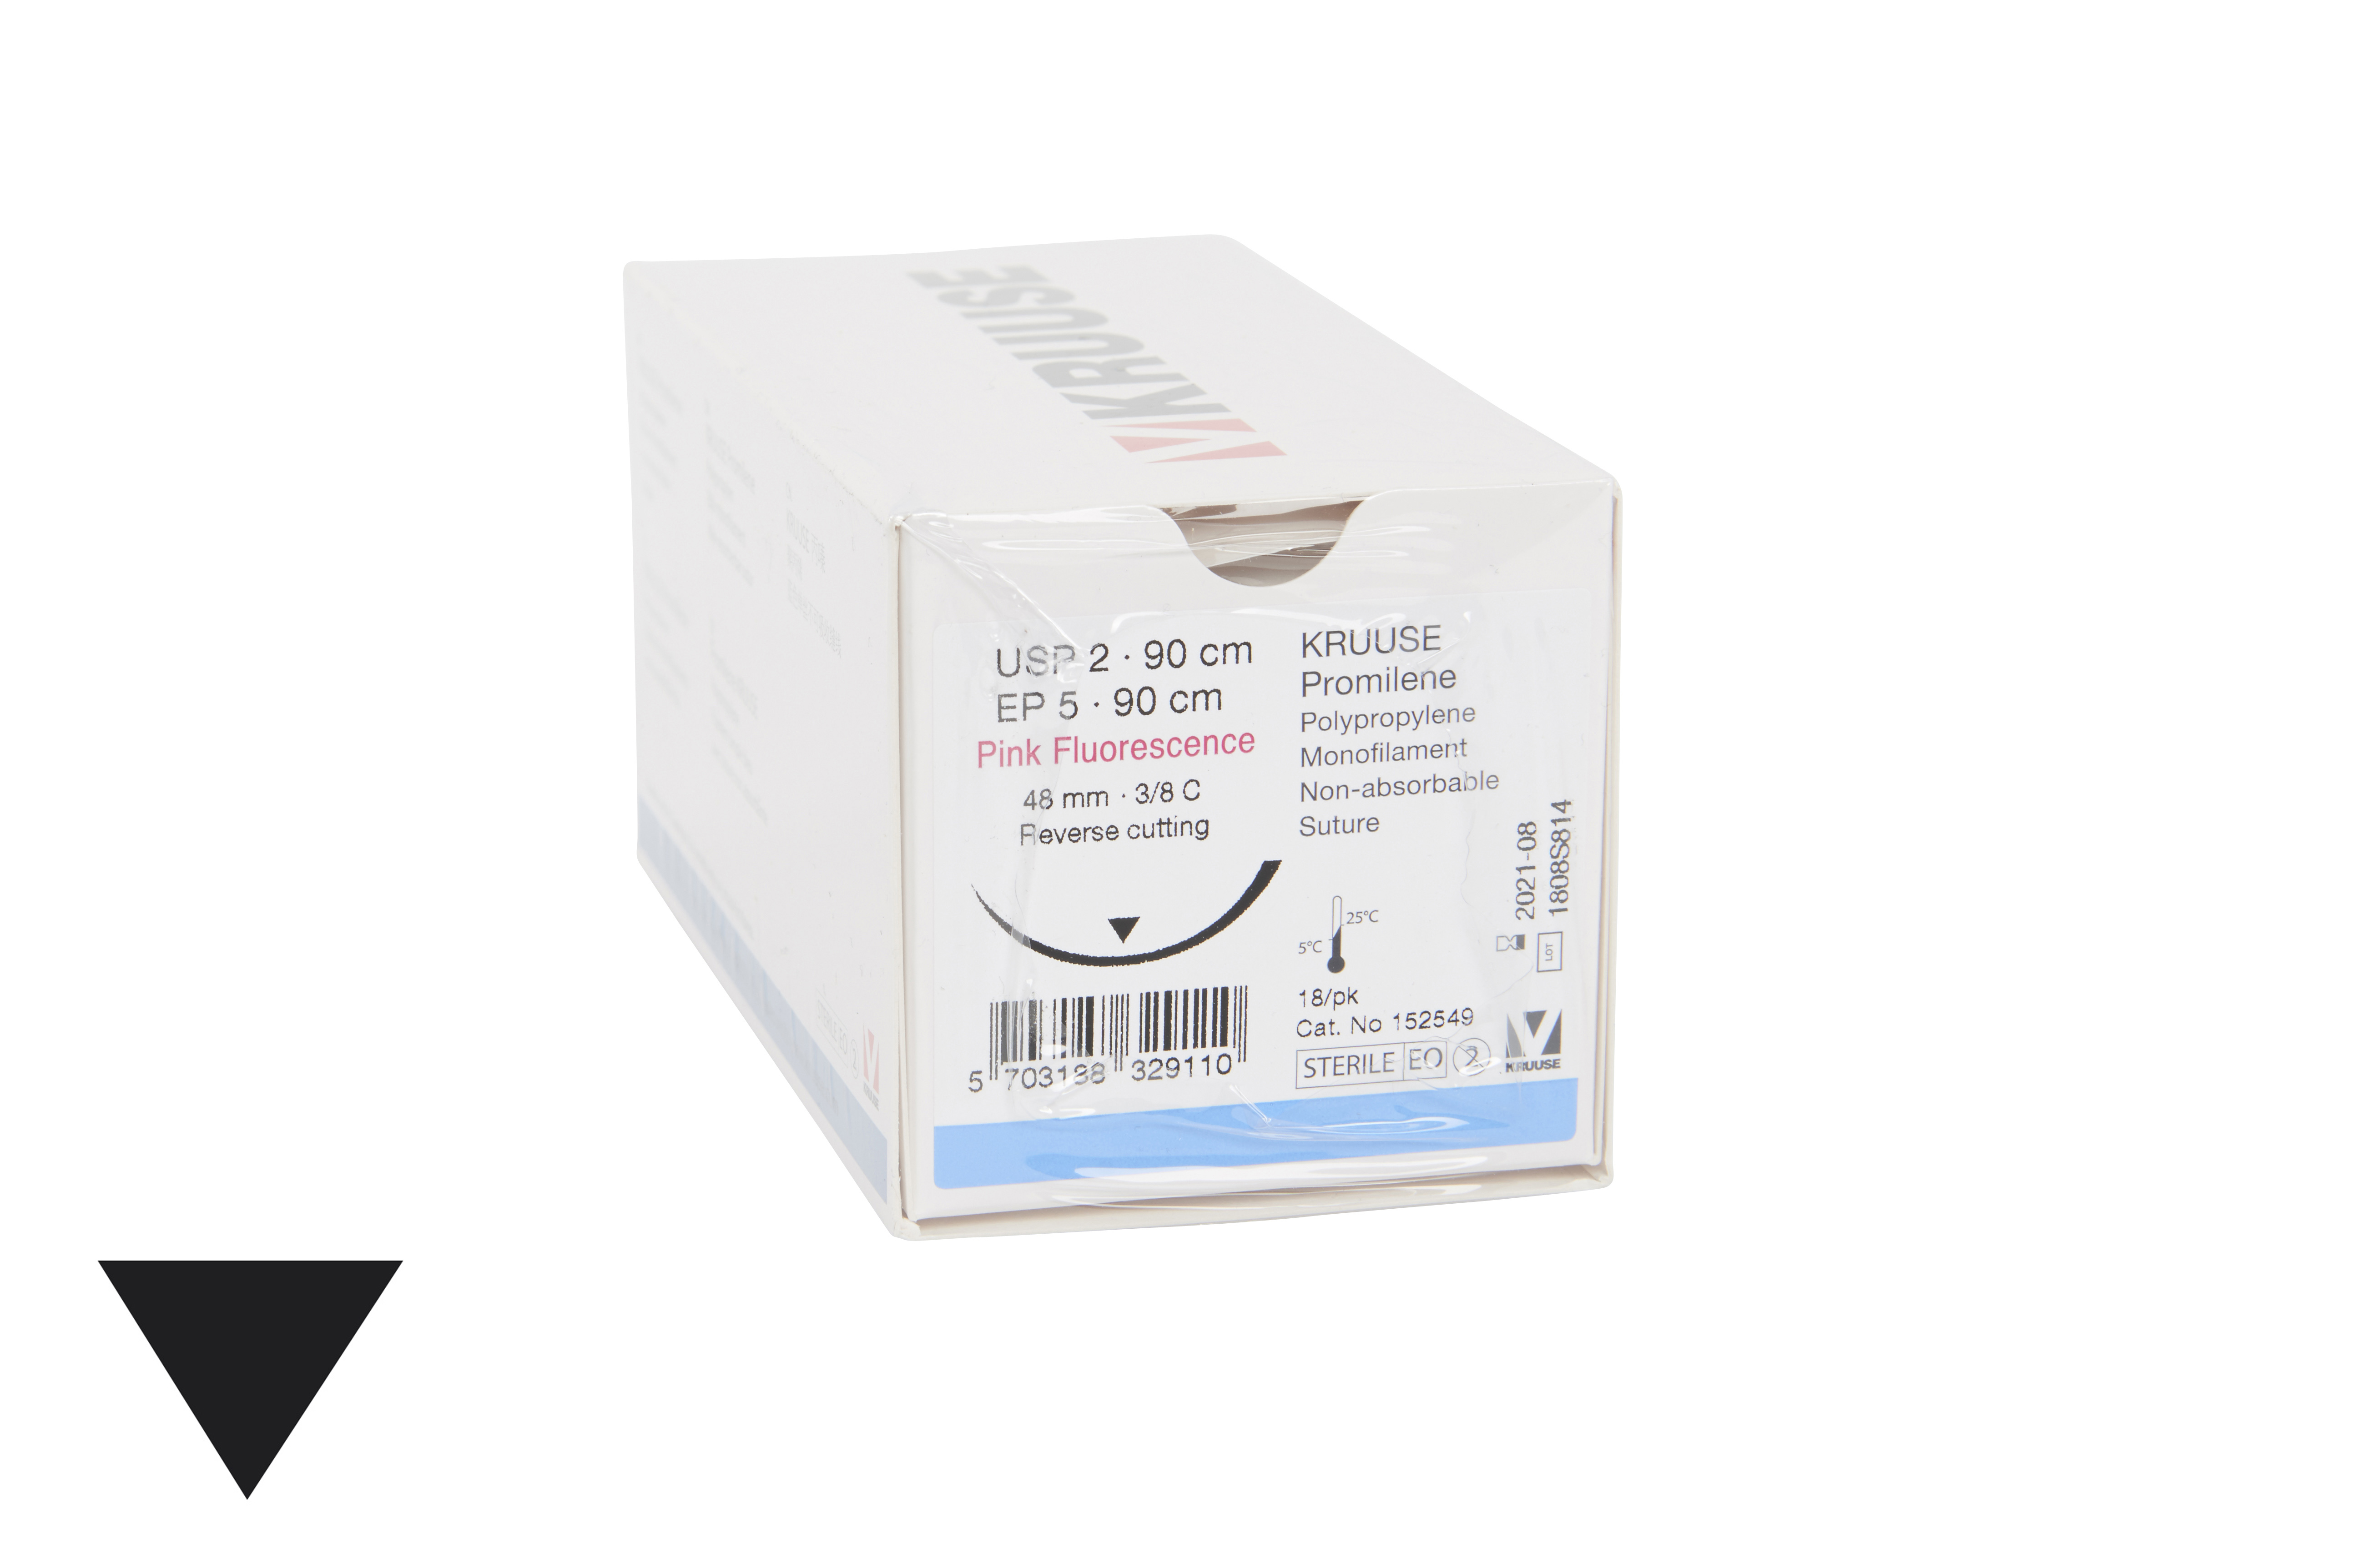 KRUUSE Promilene Suture, USP 2/EP 5, 90 cm, pink (fluorescence). Needle: 48 mm, 3/8C, RC, 18/pk